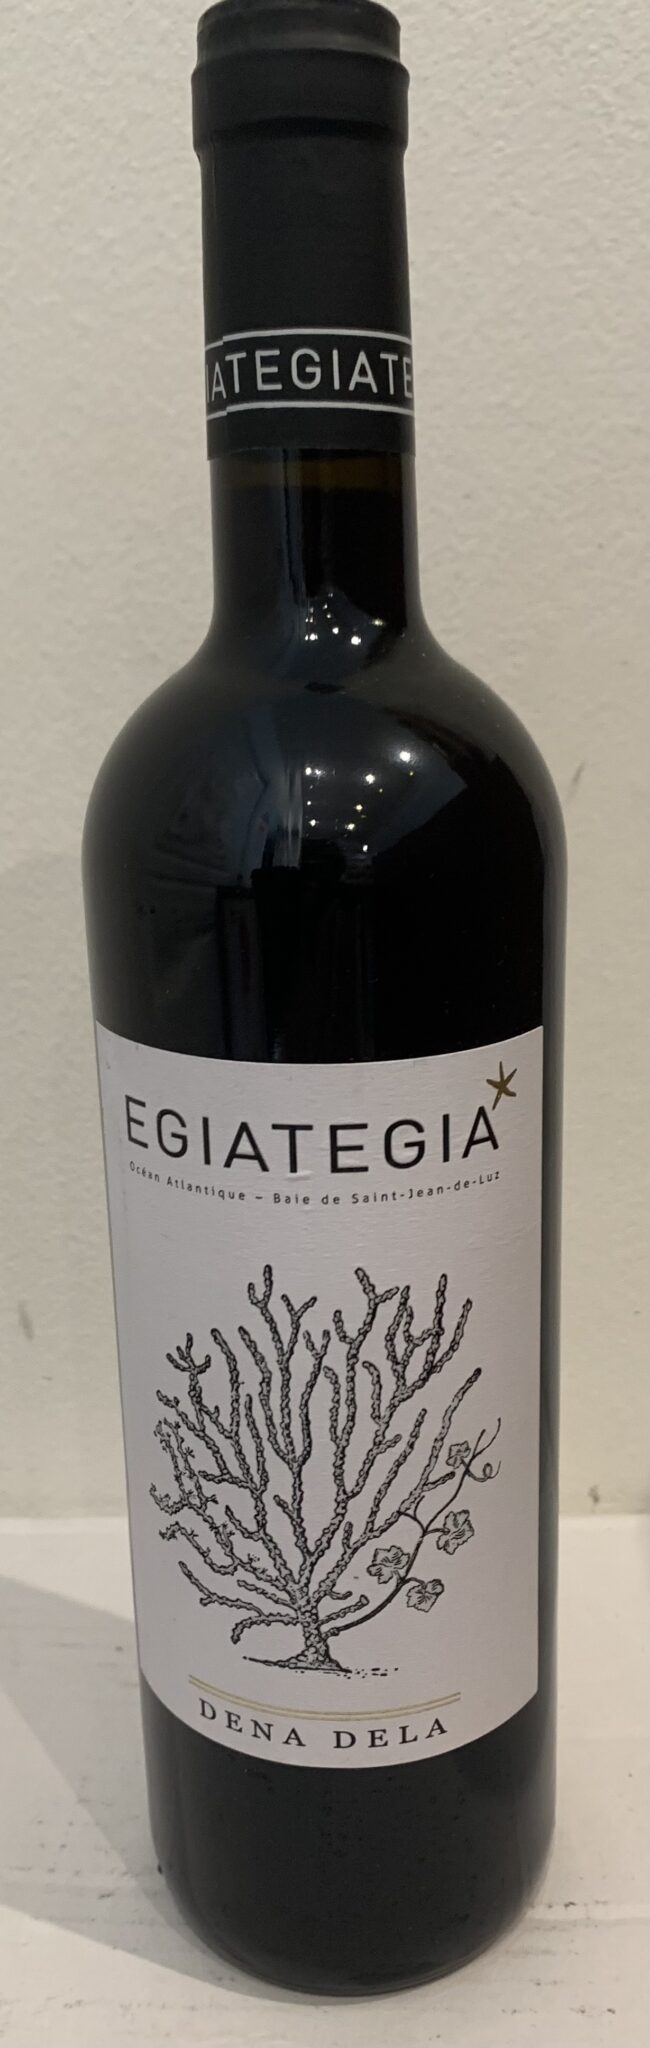 Vin rouge - Egiategia - Cuvée Dena Dela - 2020